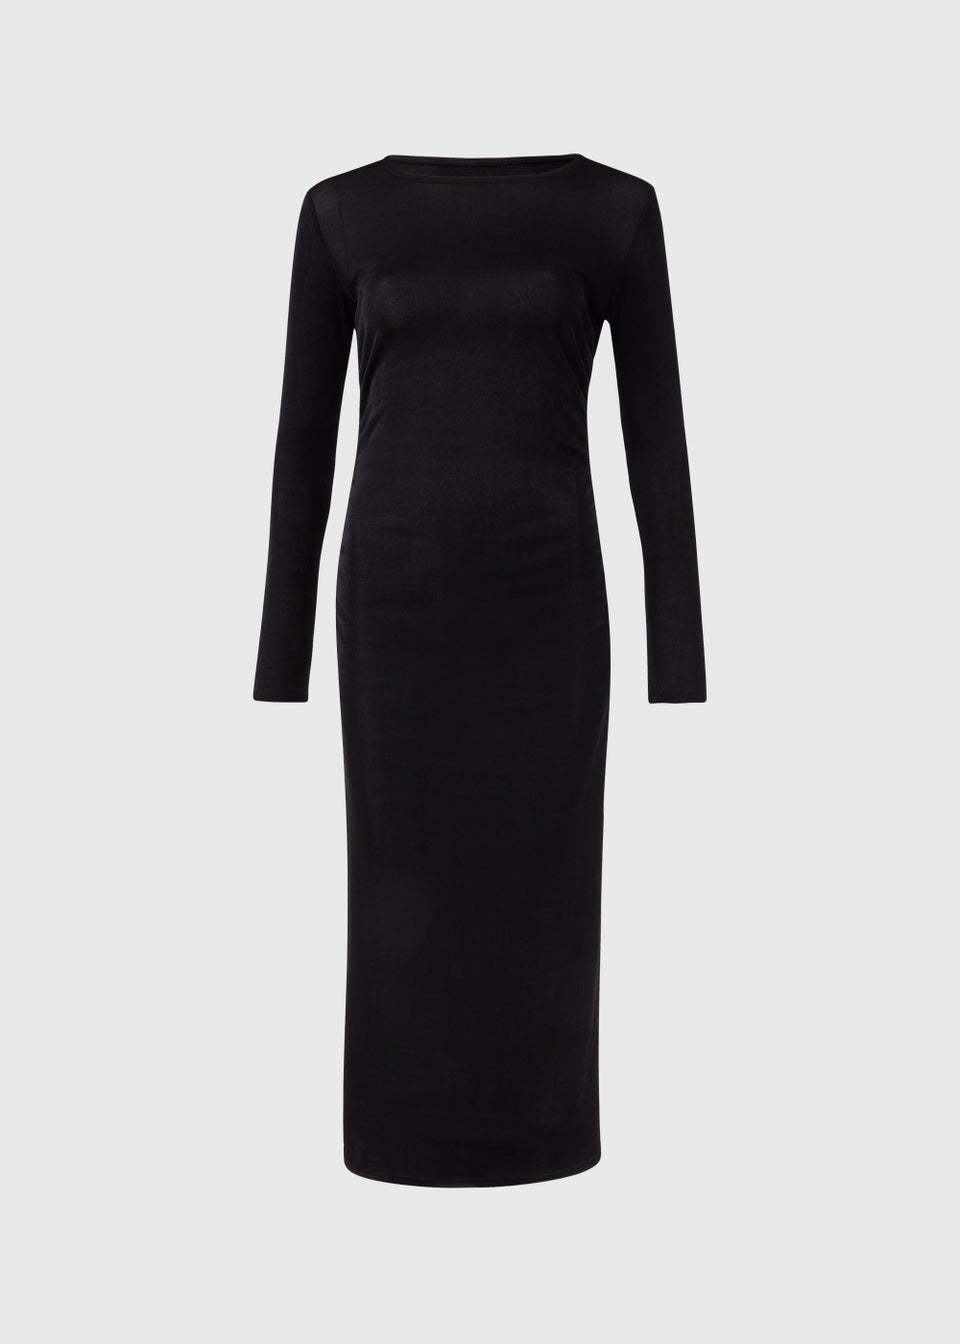 Black Ruched Side Dress - Matalan